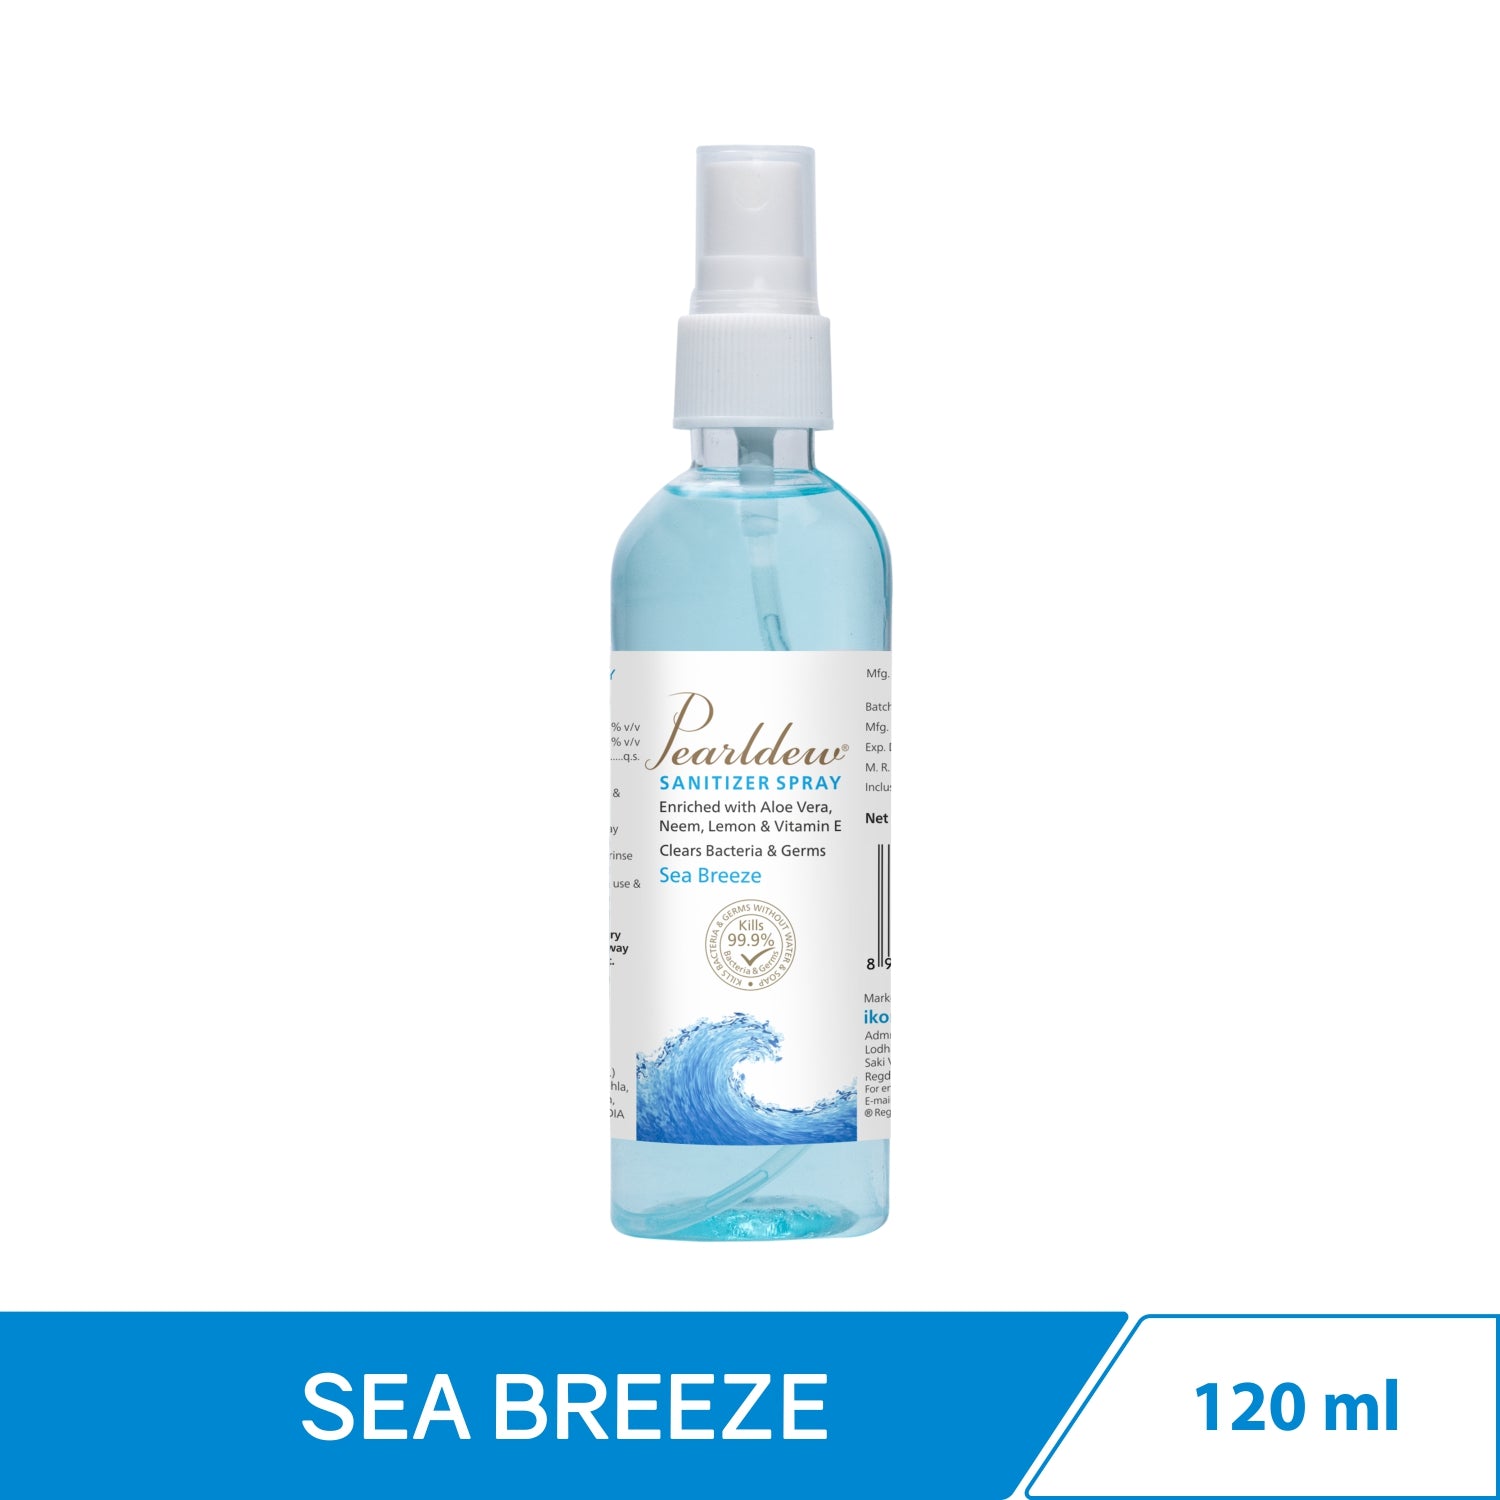 Pearldew Hand Sanitizer Spray (Sea Breeze) 120 ml